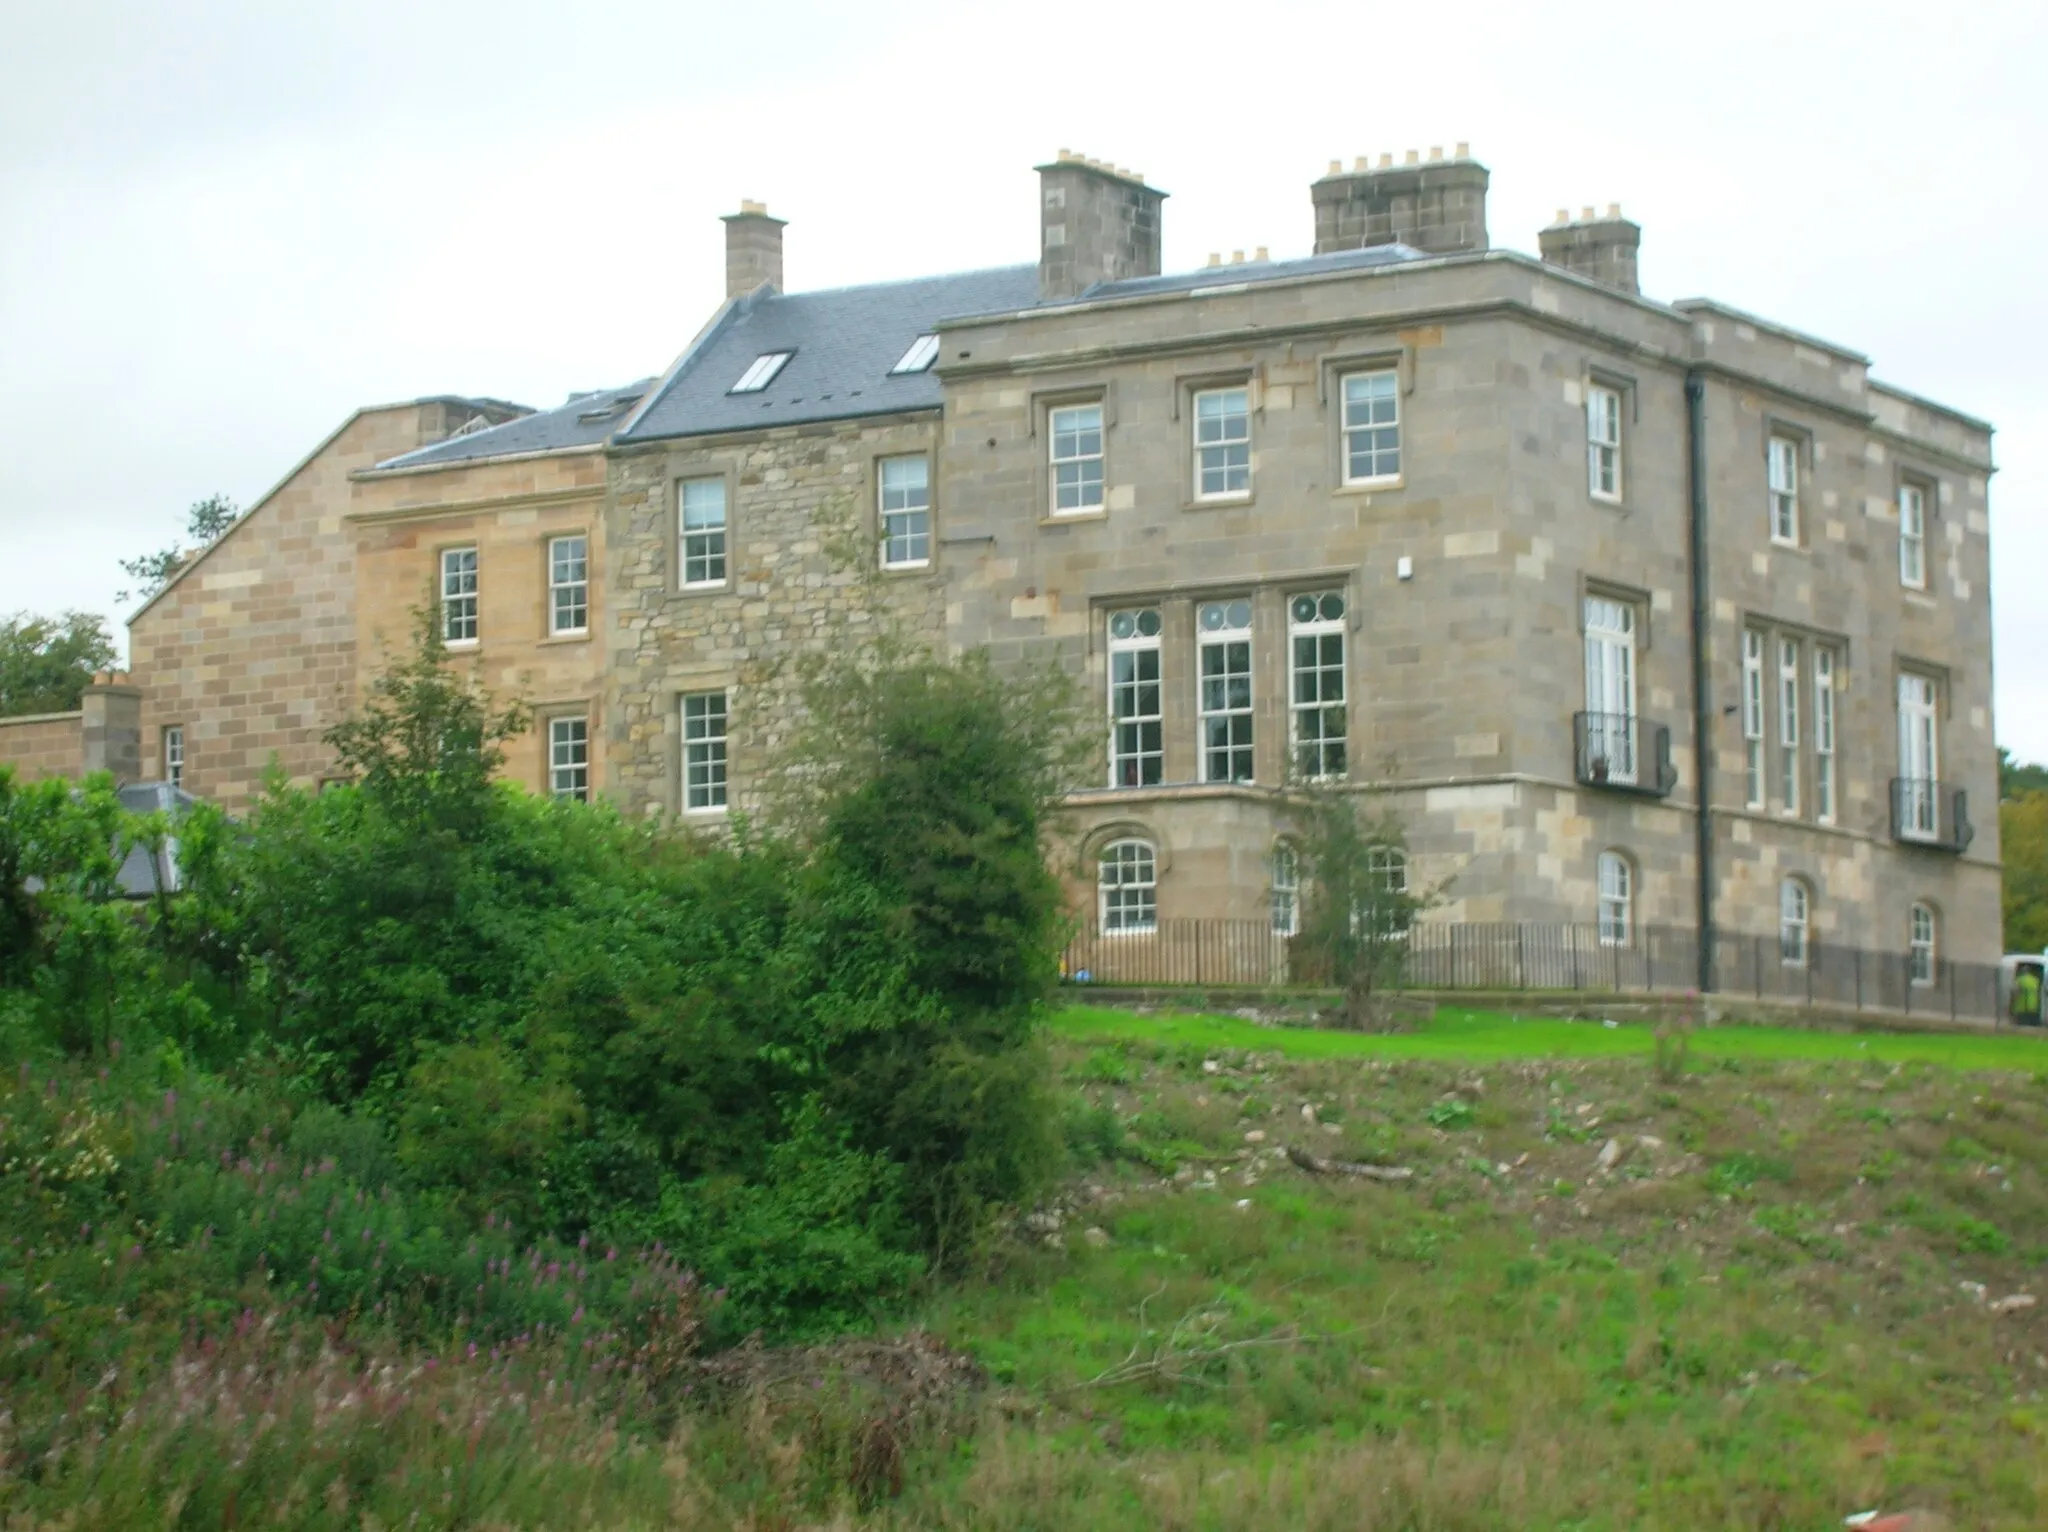 Photo showing: The renovated Lainshaw House, Stewarton, East Ayrshire, Scotland.